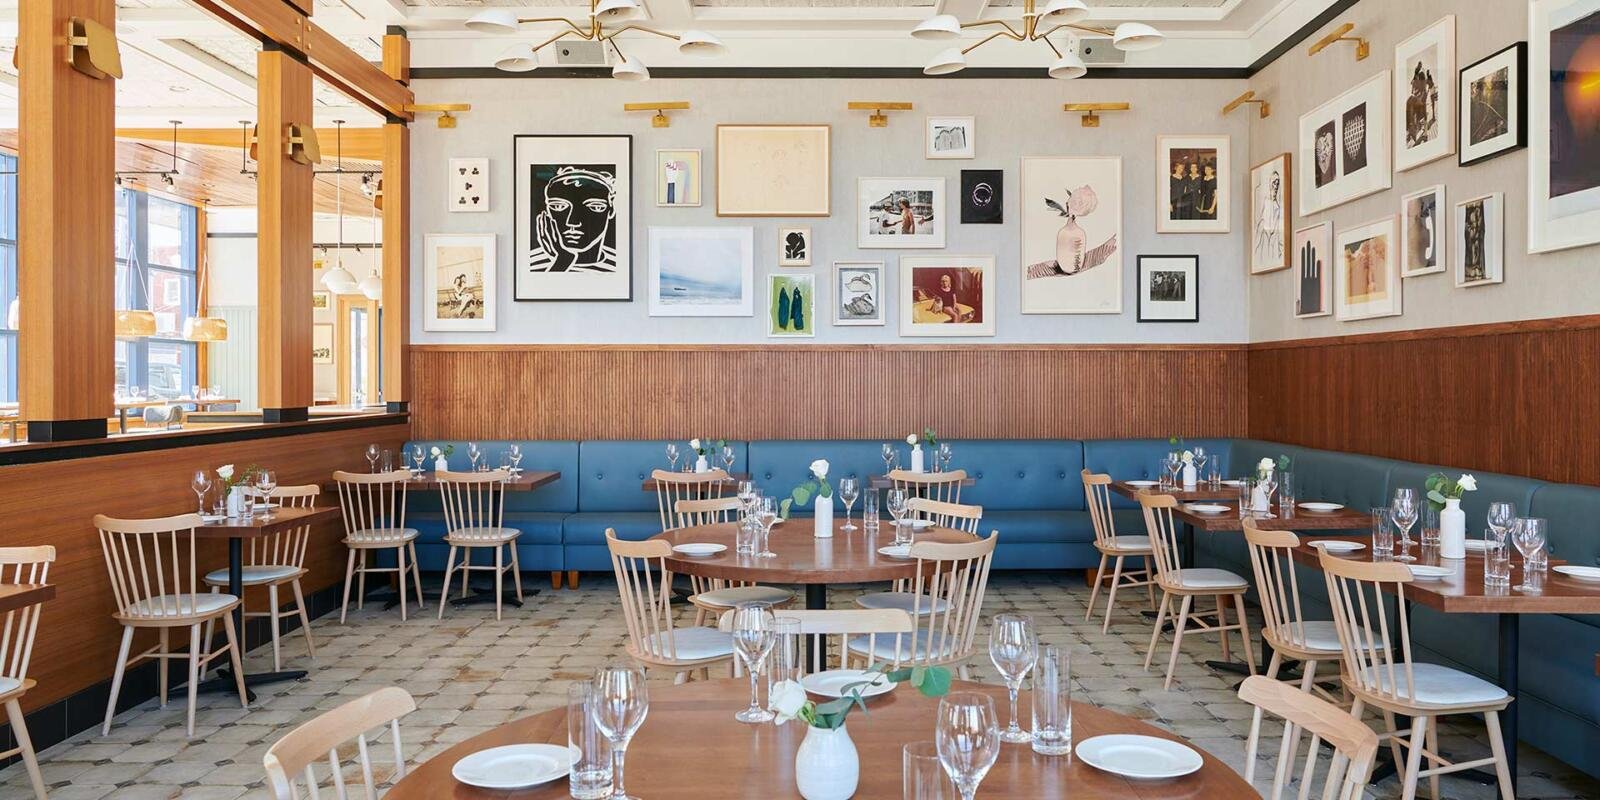 Margie-Restaurant-NYC-by-Kyle-Knodell-Rockaway-Beach-220909231643004-1600x800.jpg